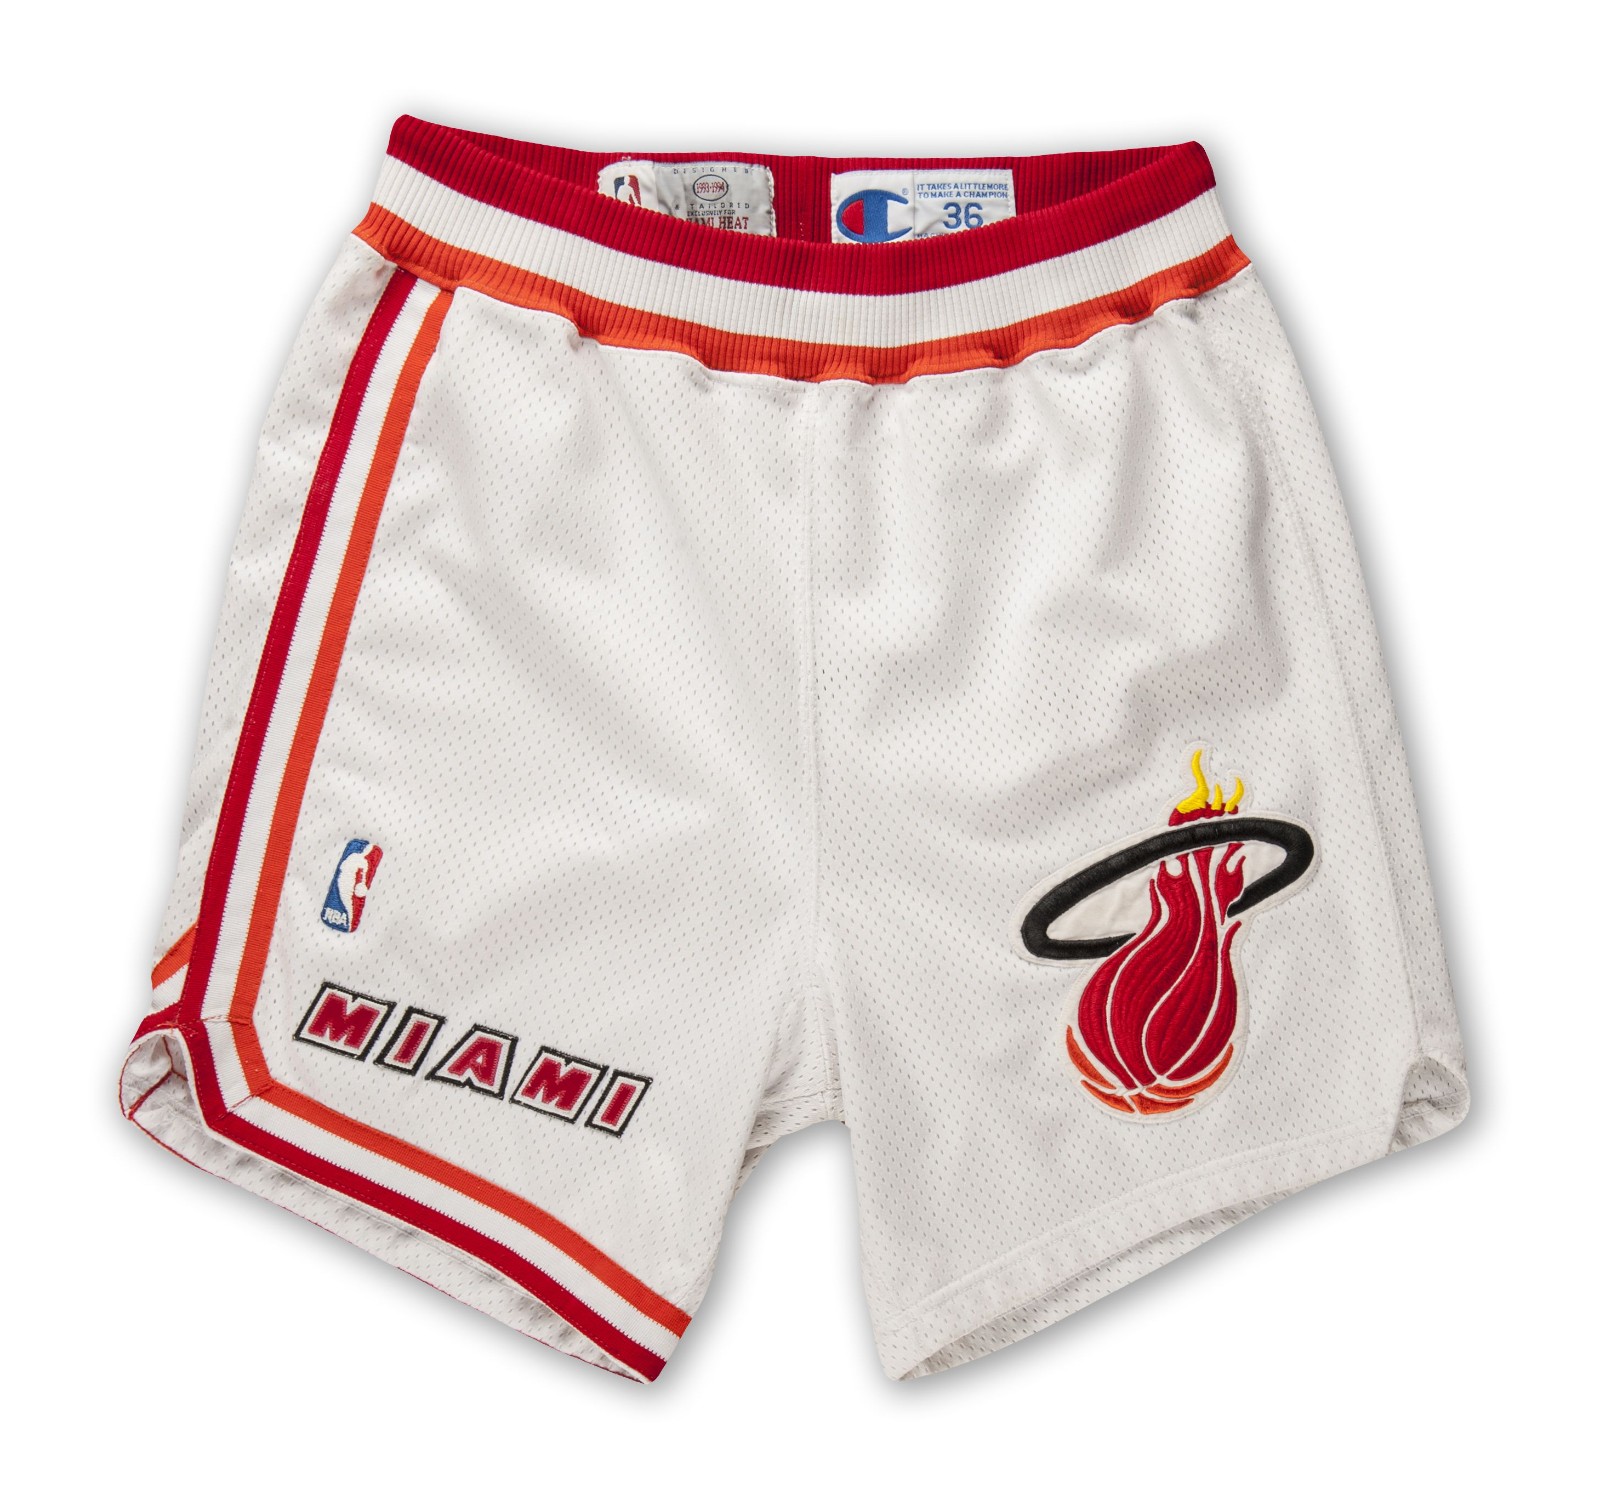 Miami Heat NBA 1988 White Red Baseball Jersey - Growkoc